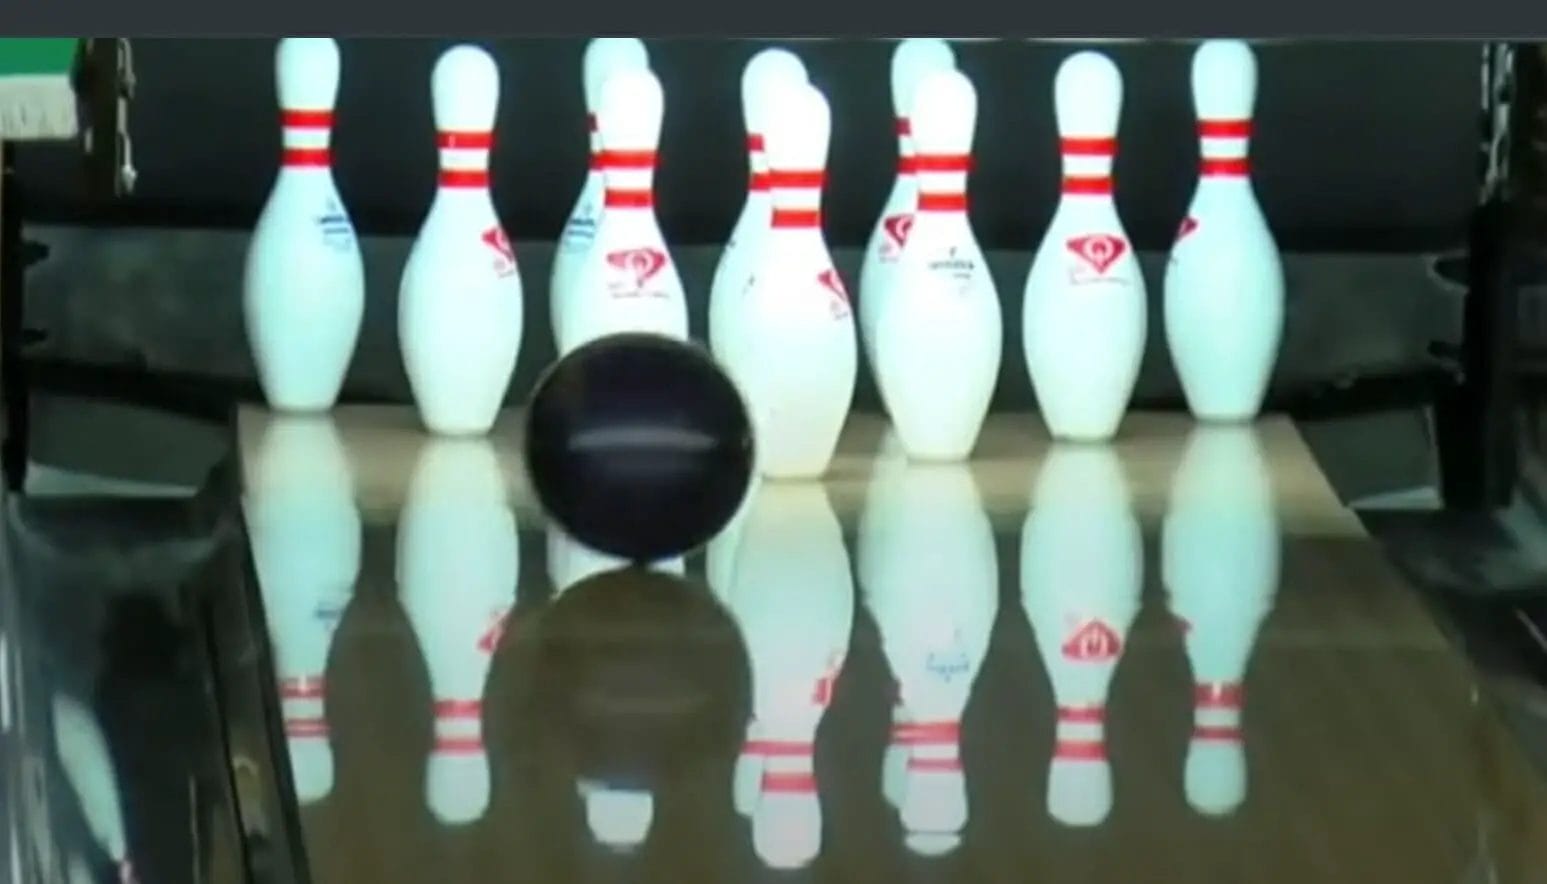 modern bowling shoes